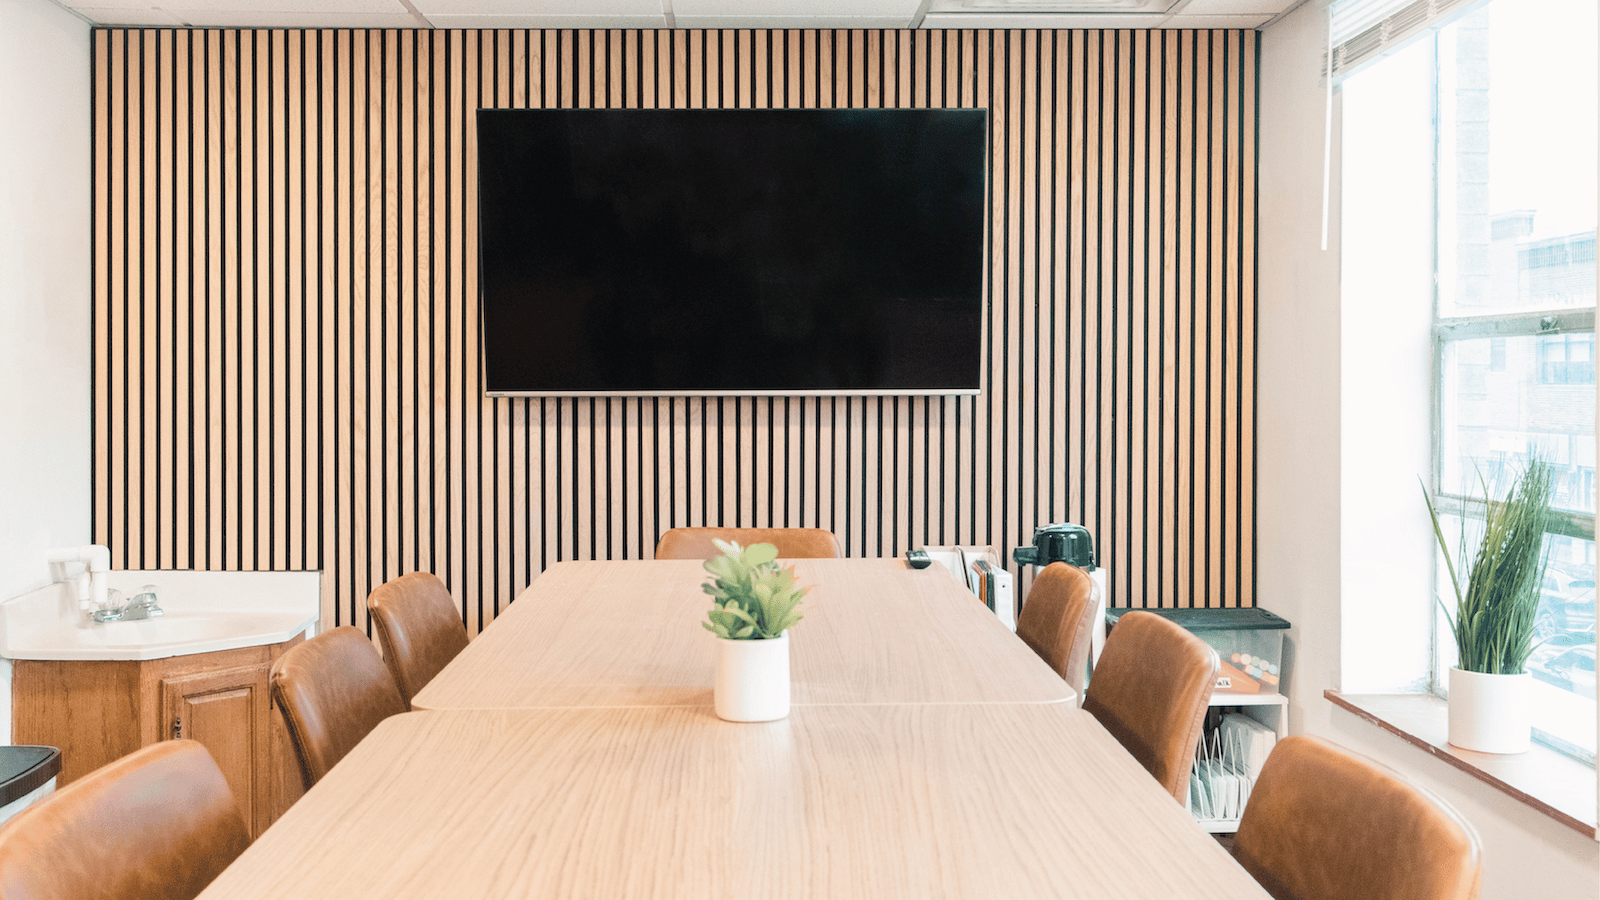 Acoustic wall panels with wooden slats - Wallribbon